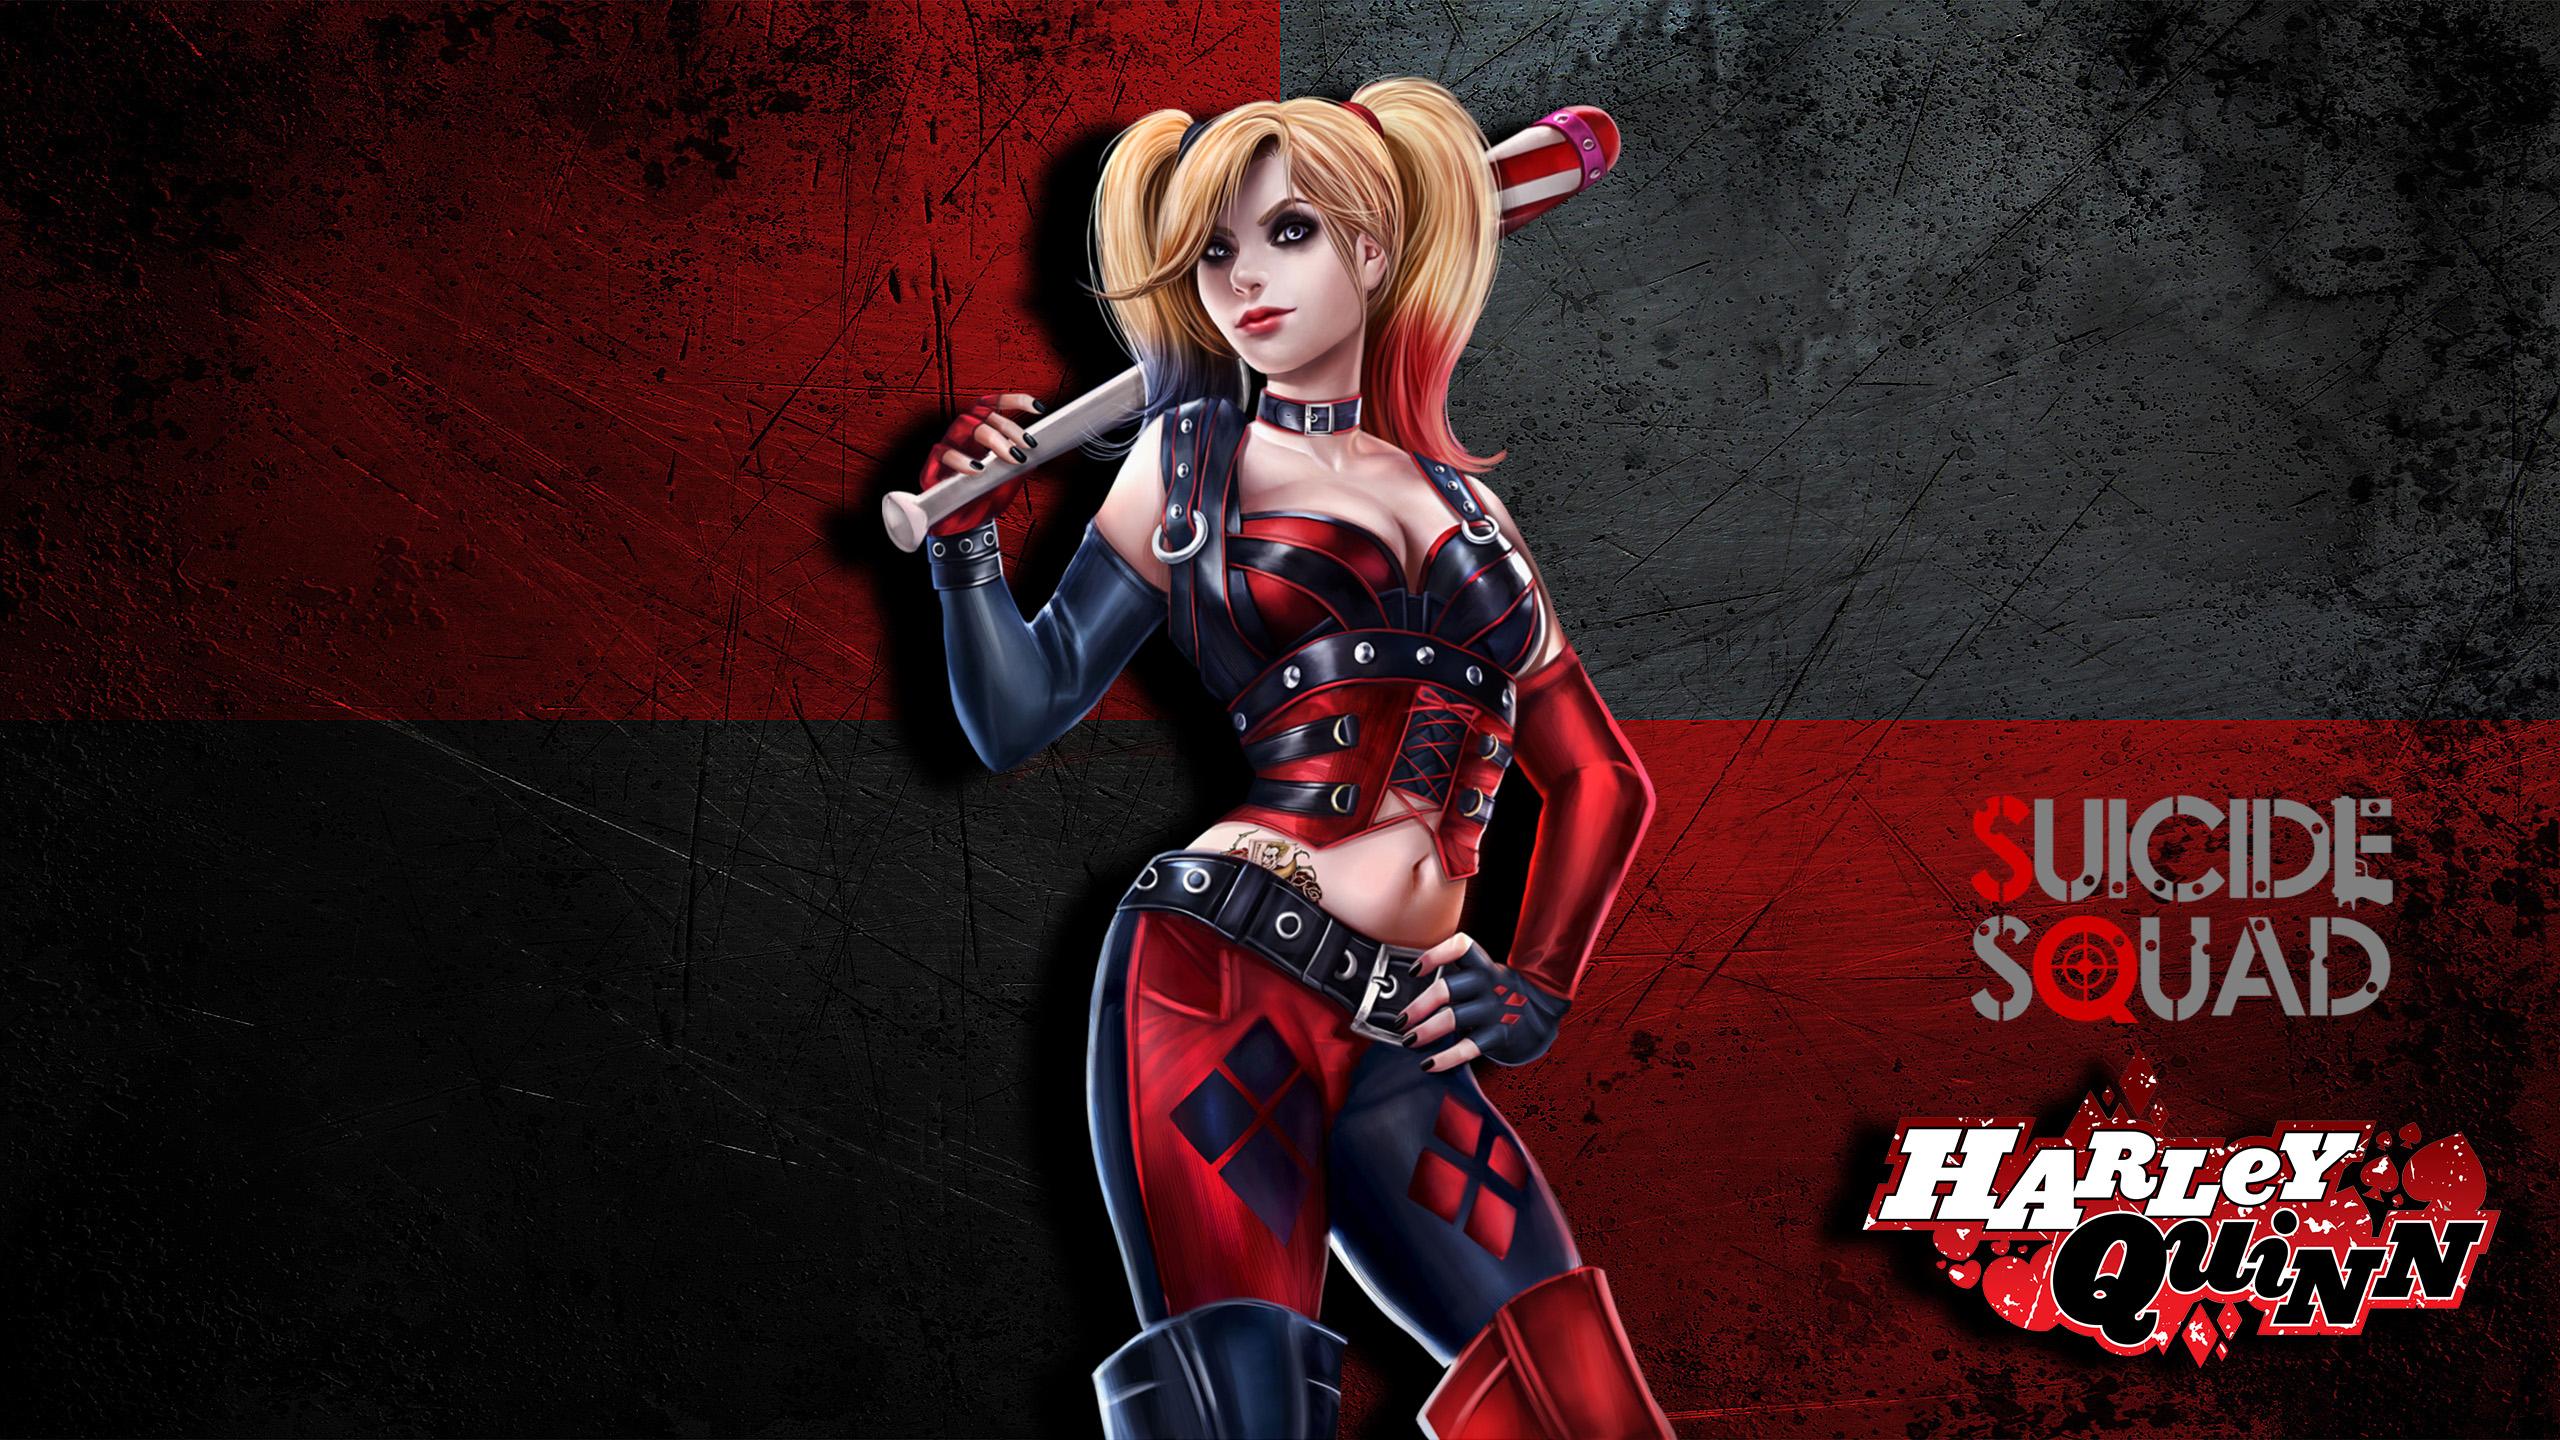 2560 x 1440 · jpeg - Harley Quinn Suicide Squad Wallpaper - WallpaperSafari